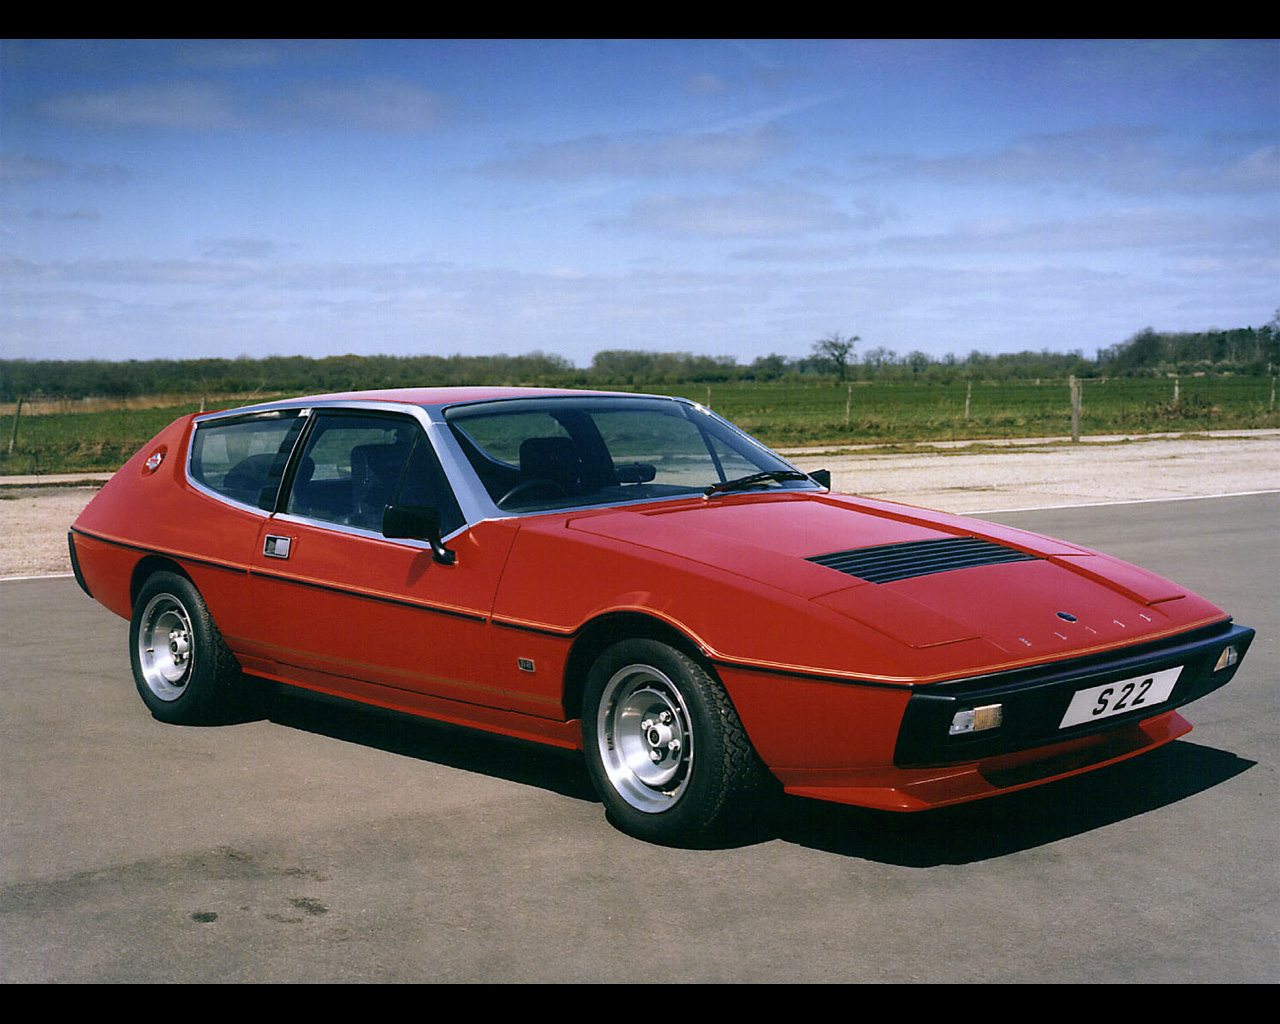 1974 Lotus Elite Project Car - $1600 (Dryden) | Groosh's Garage